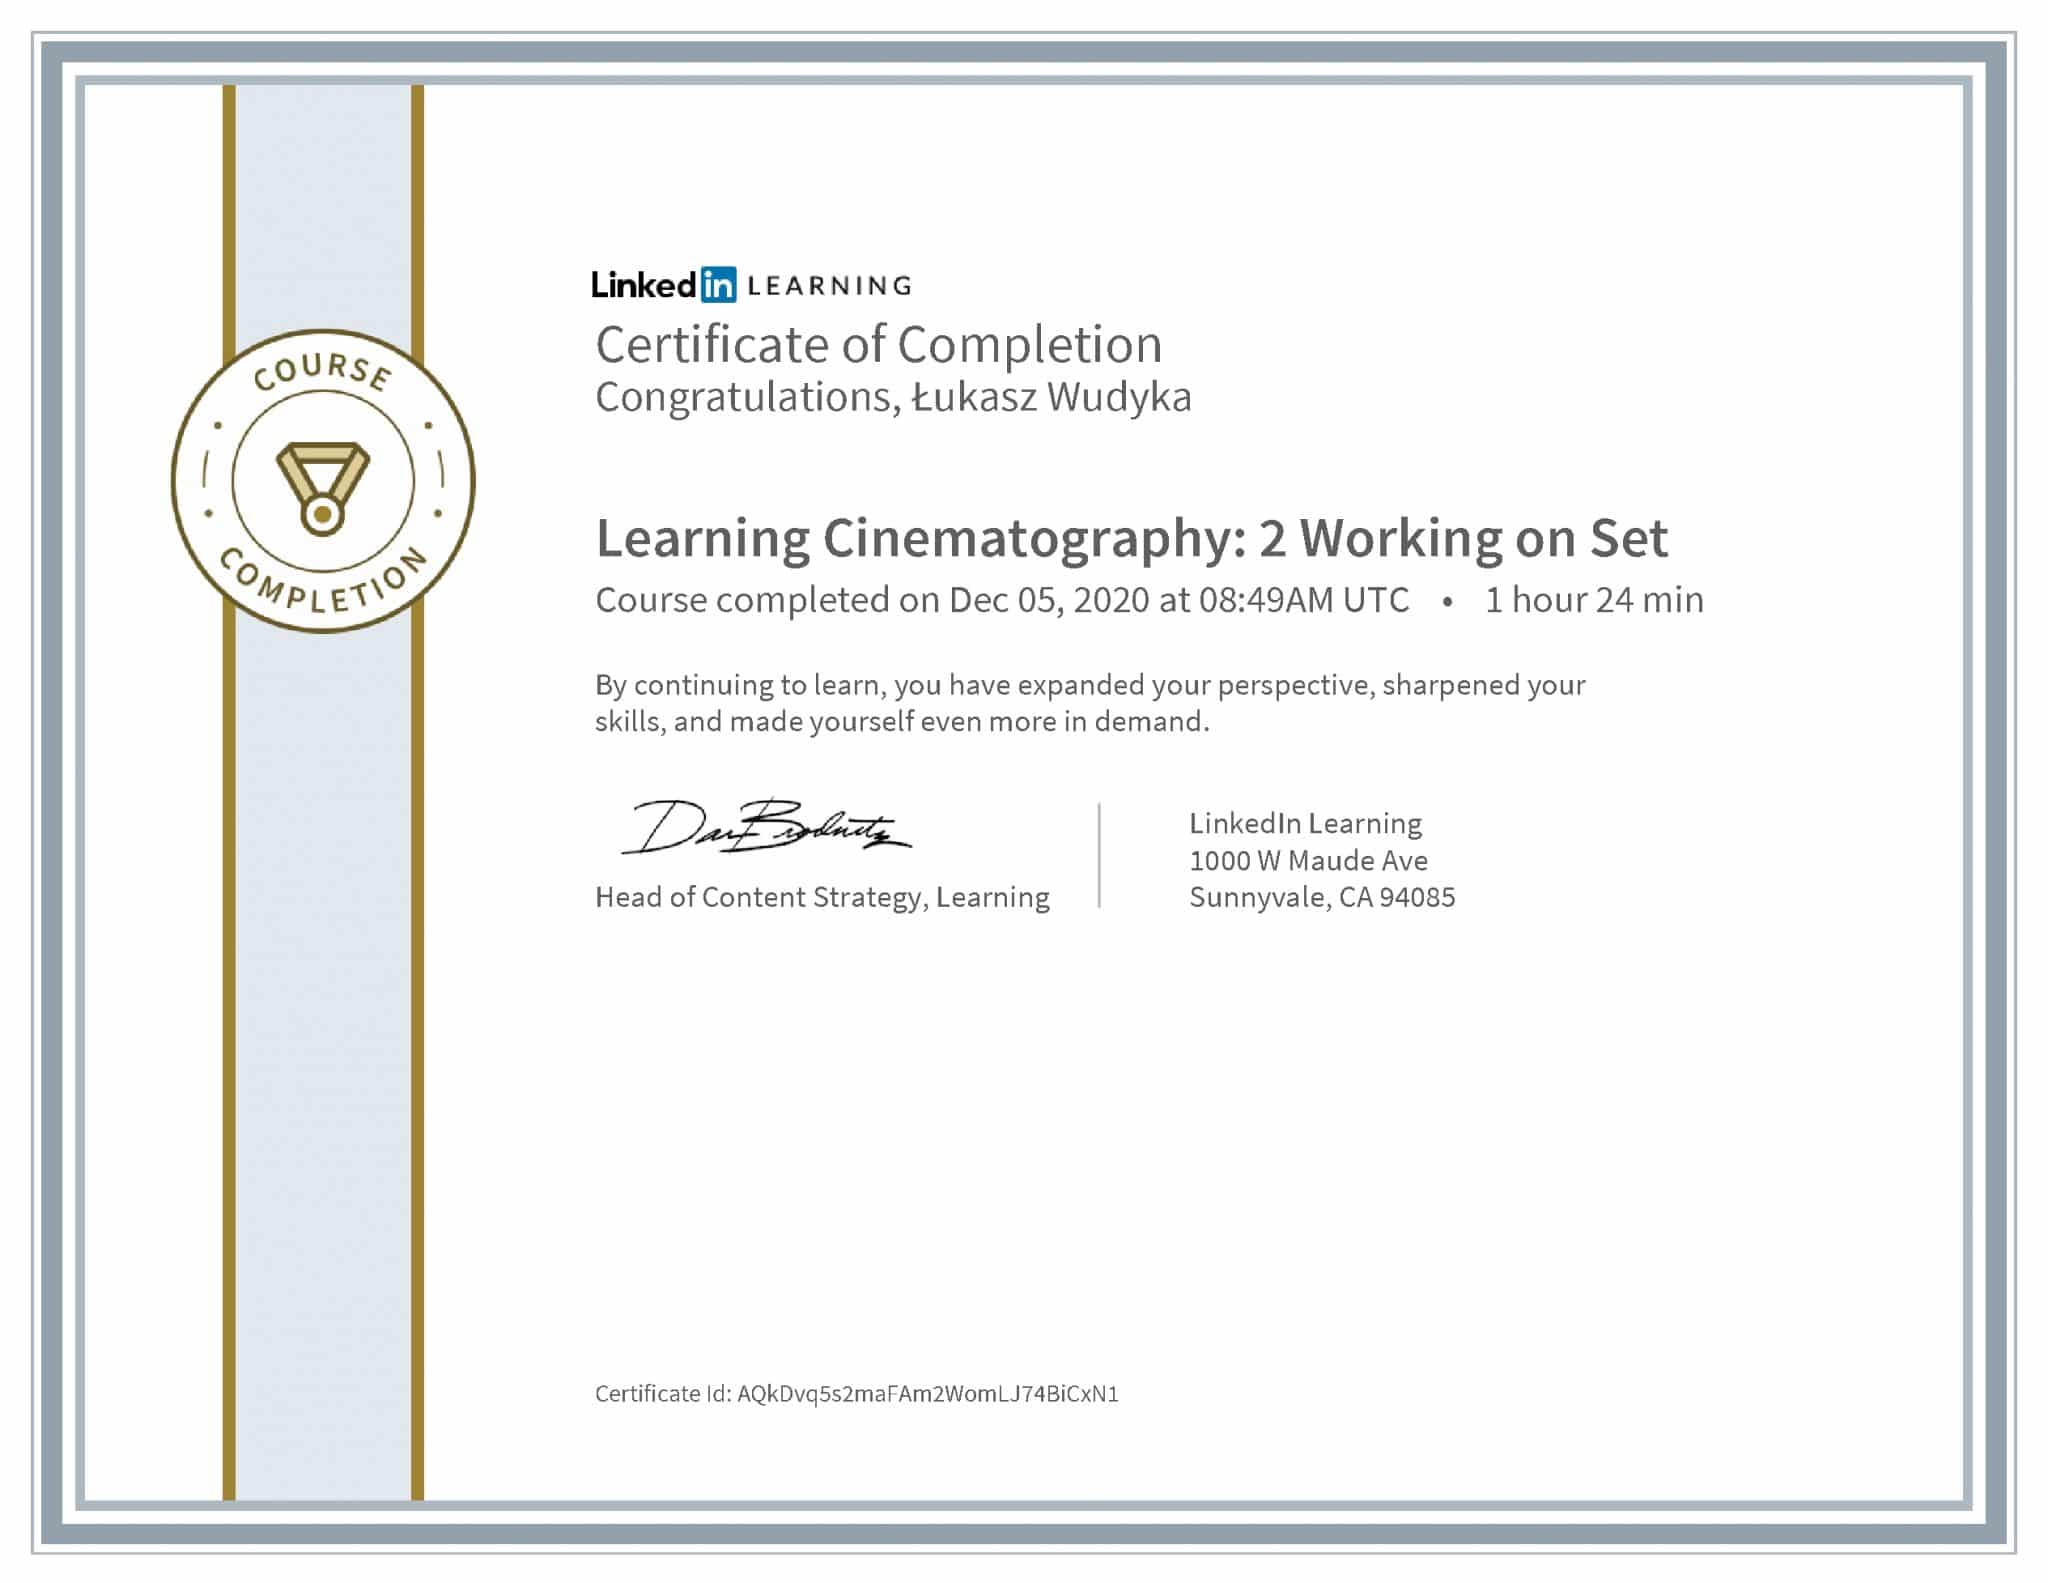 Łukasz Wudyka certyfikat LinkedIn Learning Cinematography: 2 Working on Set